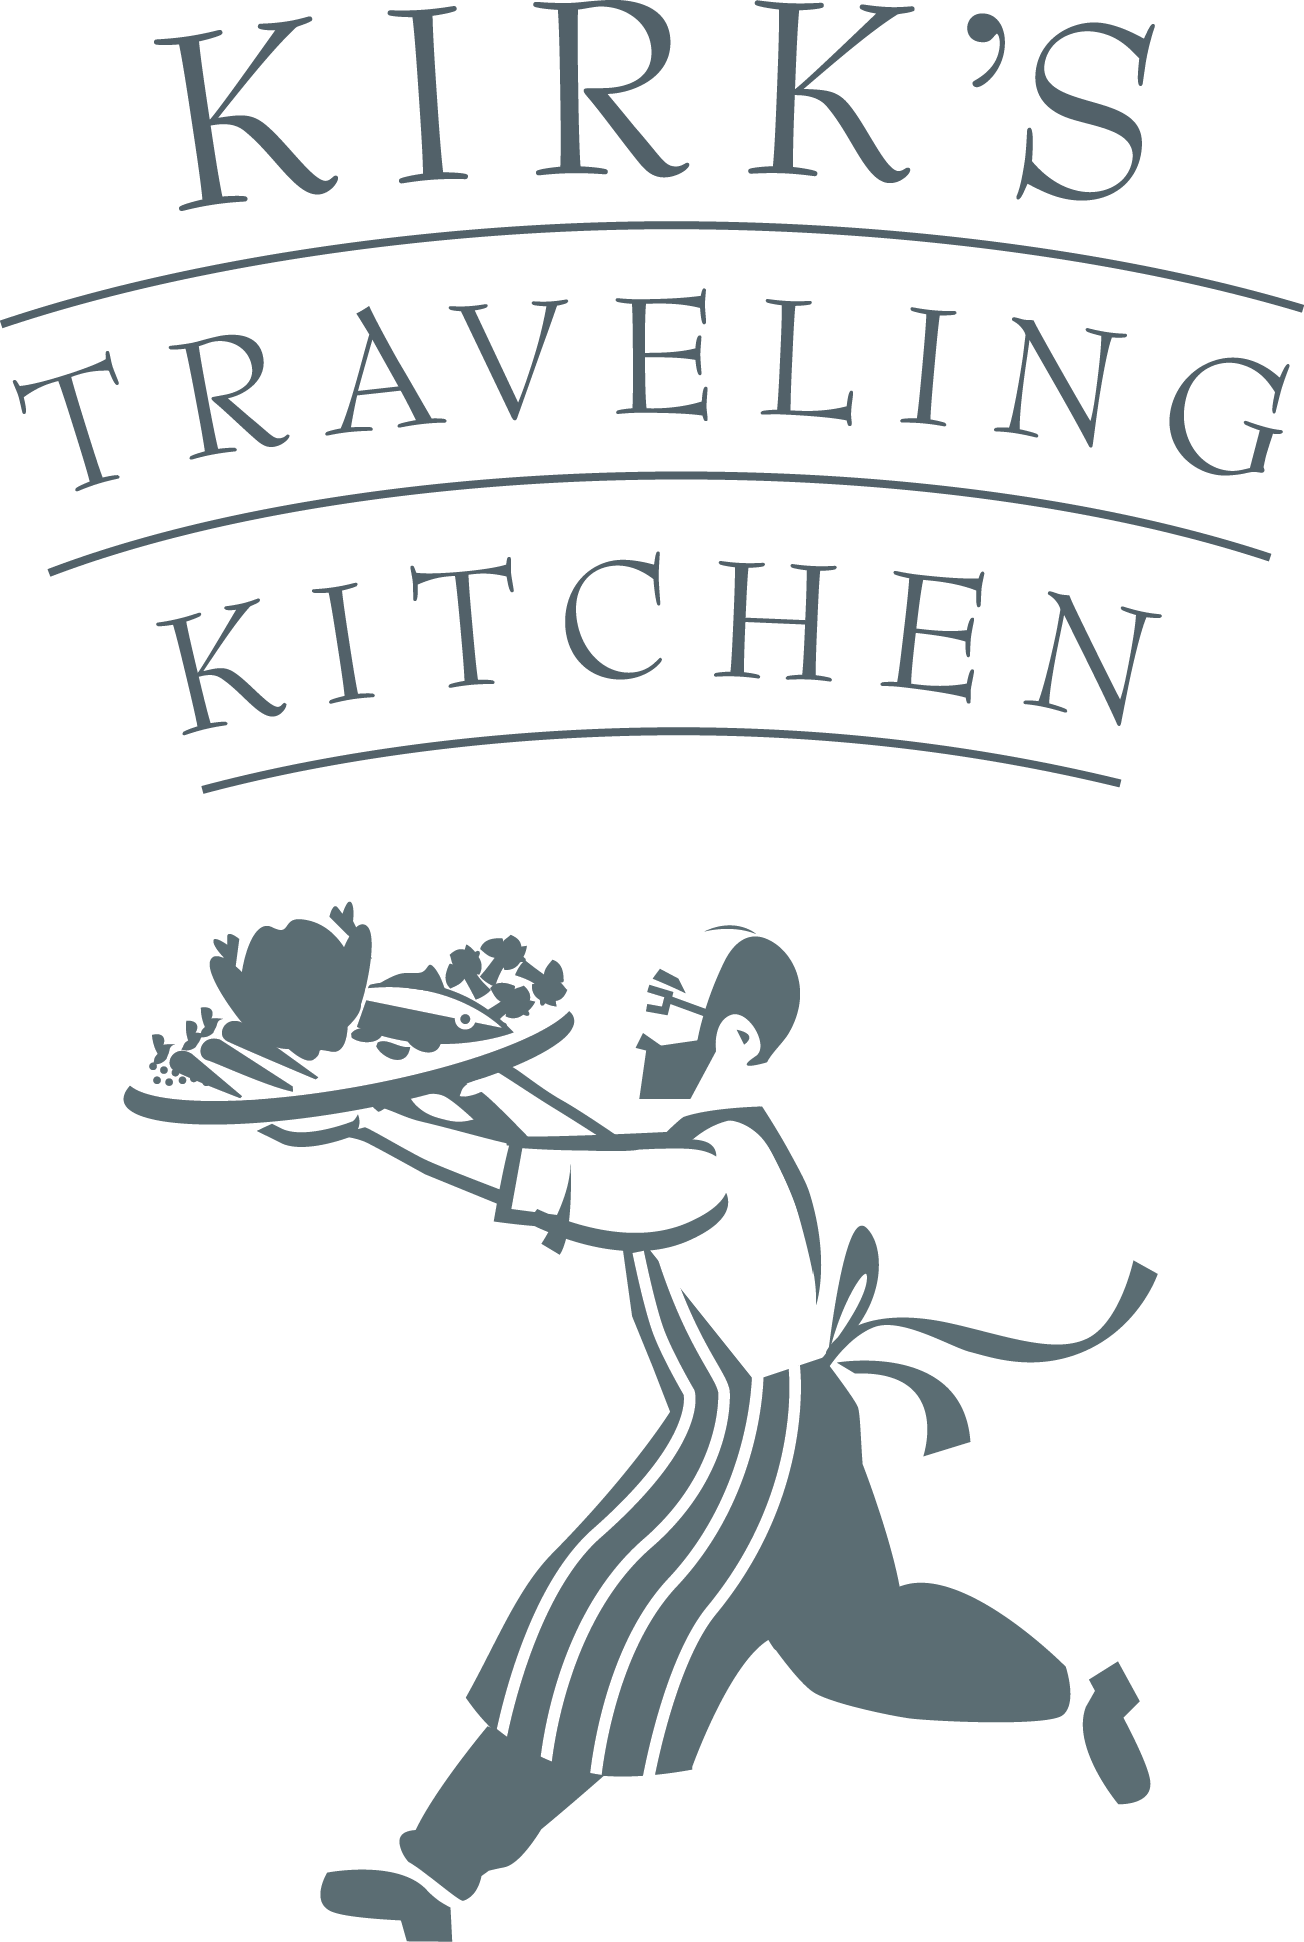 Kirk's Traveling Kitchen